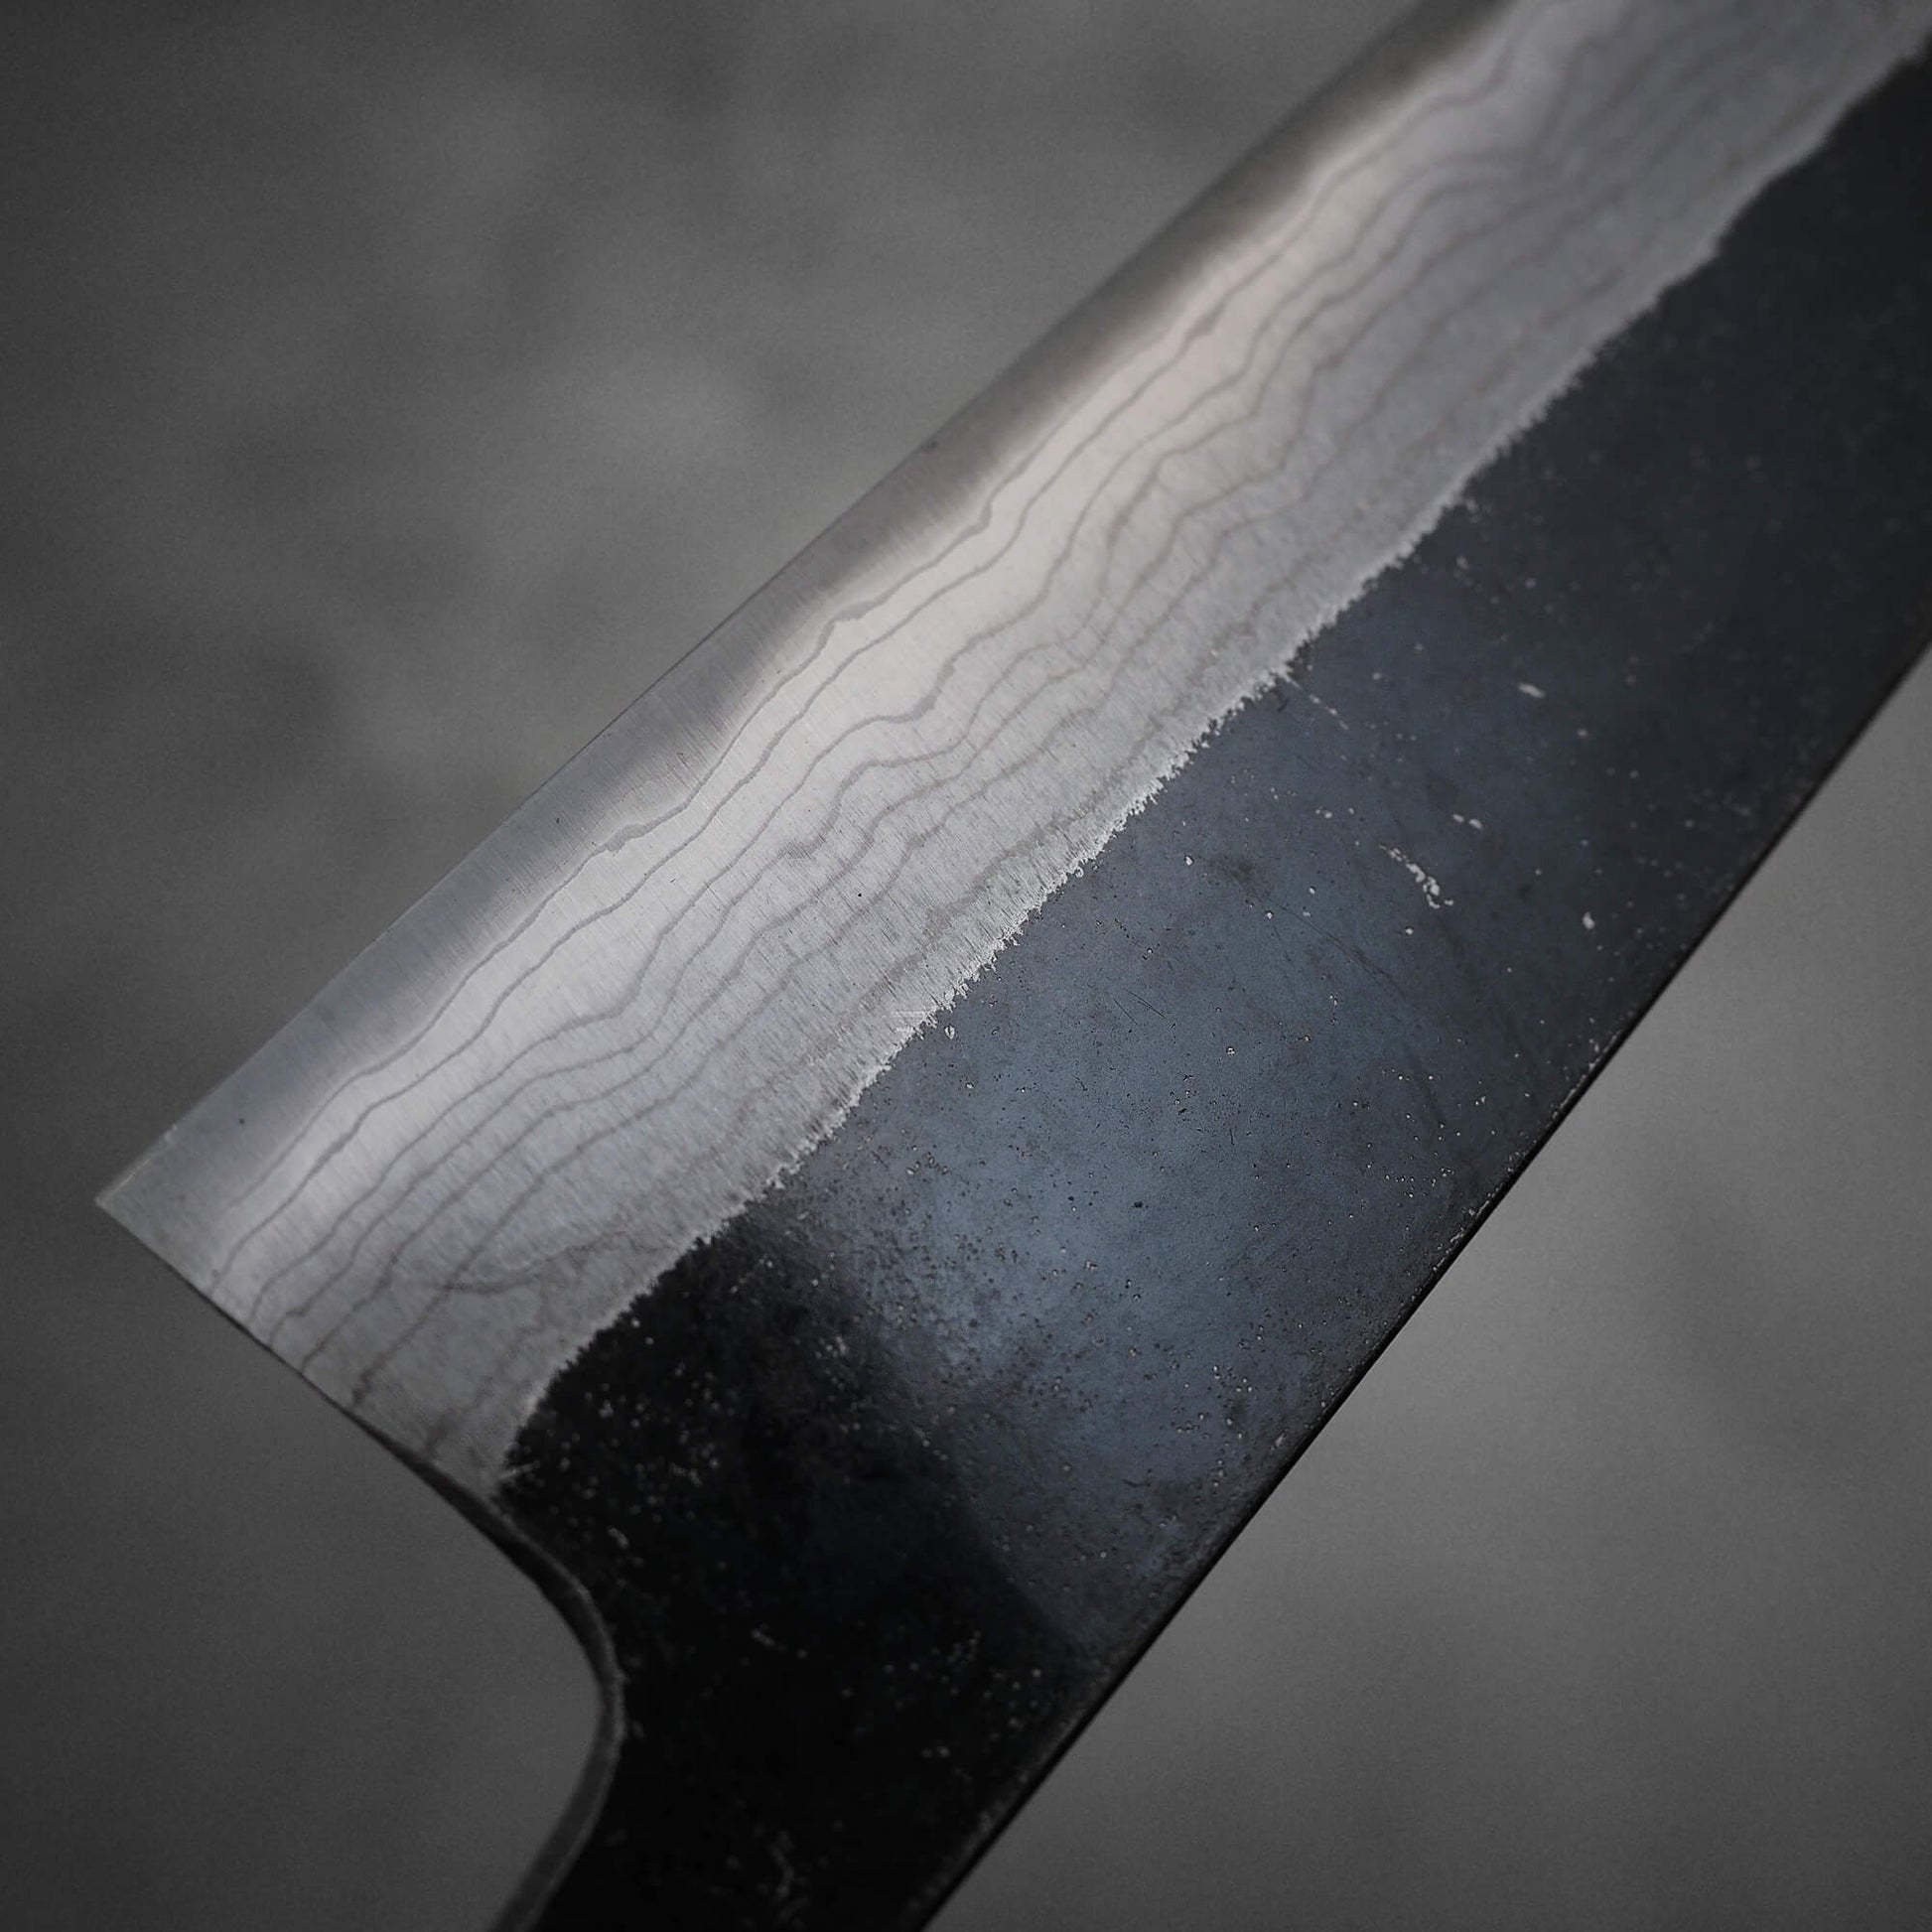 Close up view of Hatsukokoro Kumokage kurouchi damascus aogami#2 bunka knife. Image focuses on the left side of the blade at the heel